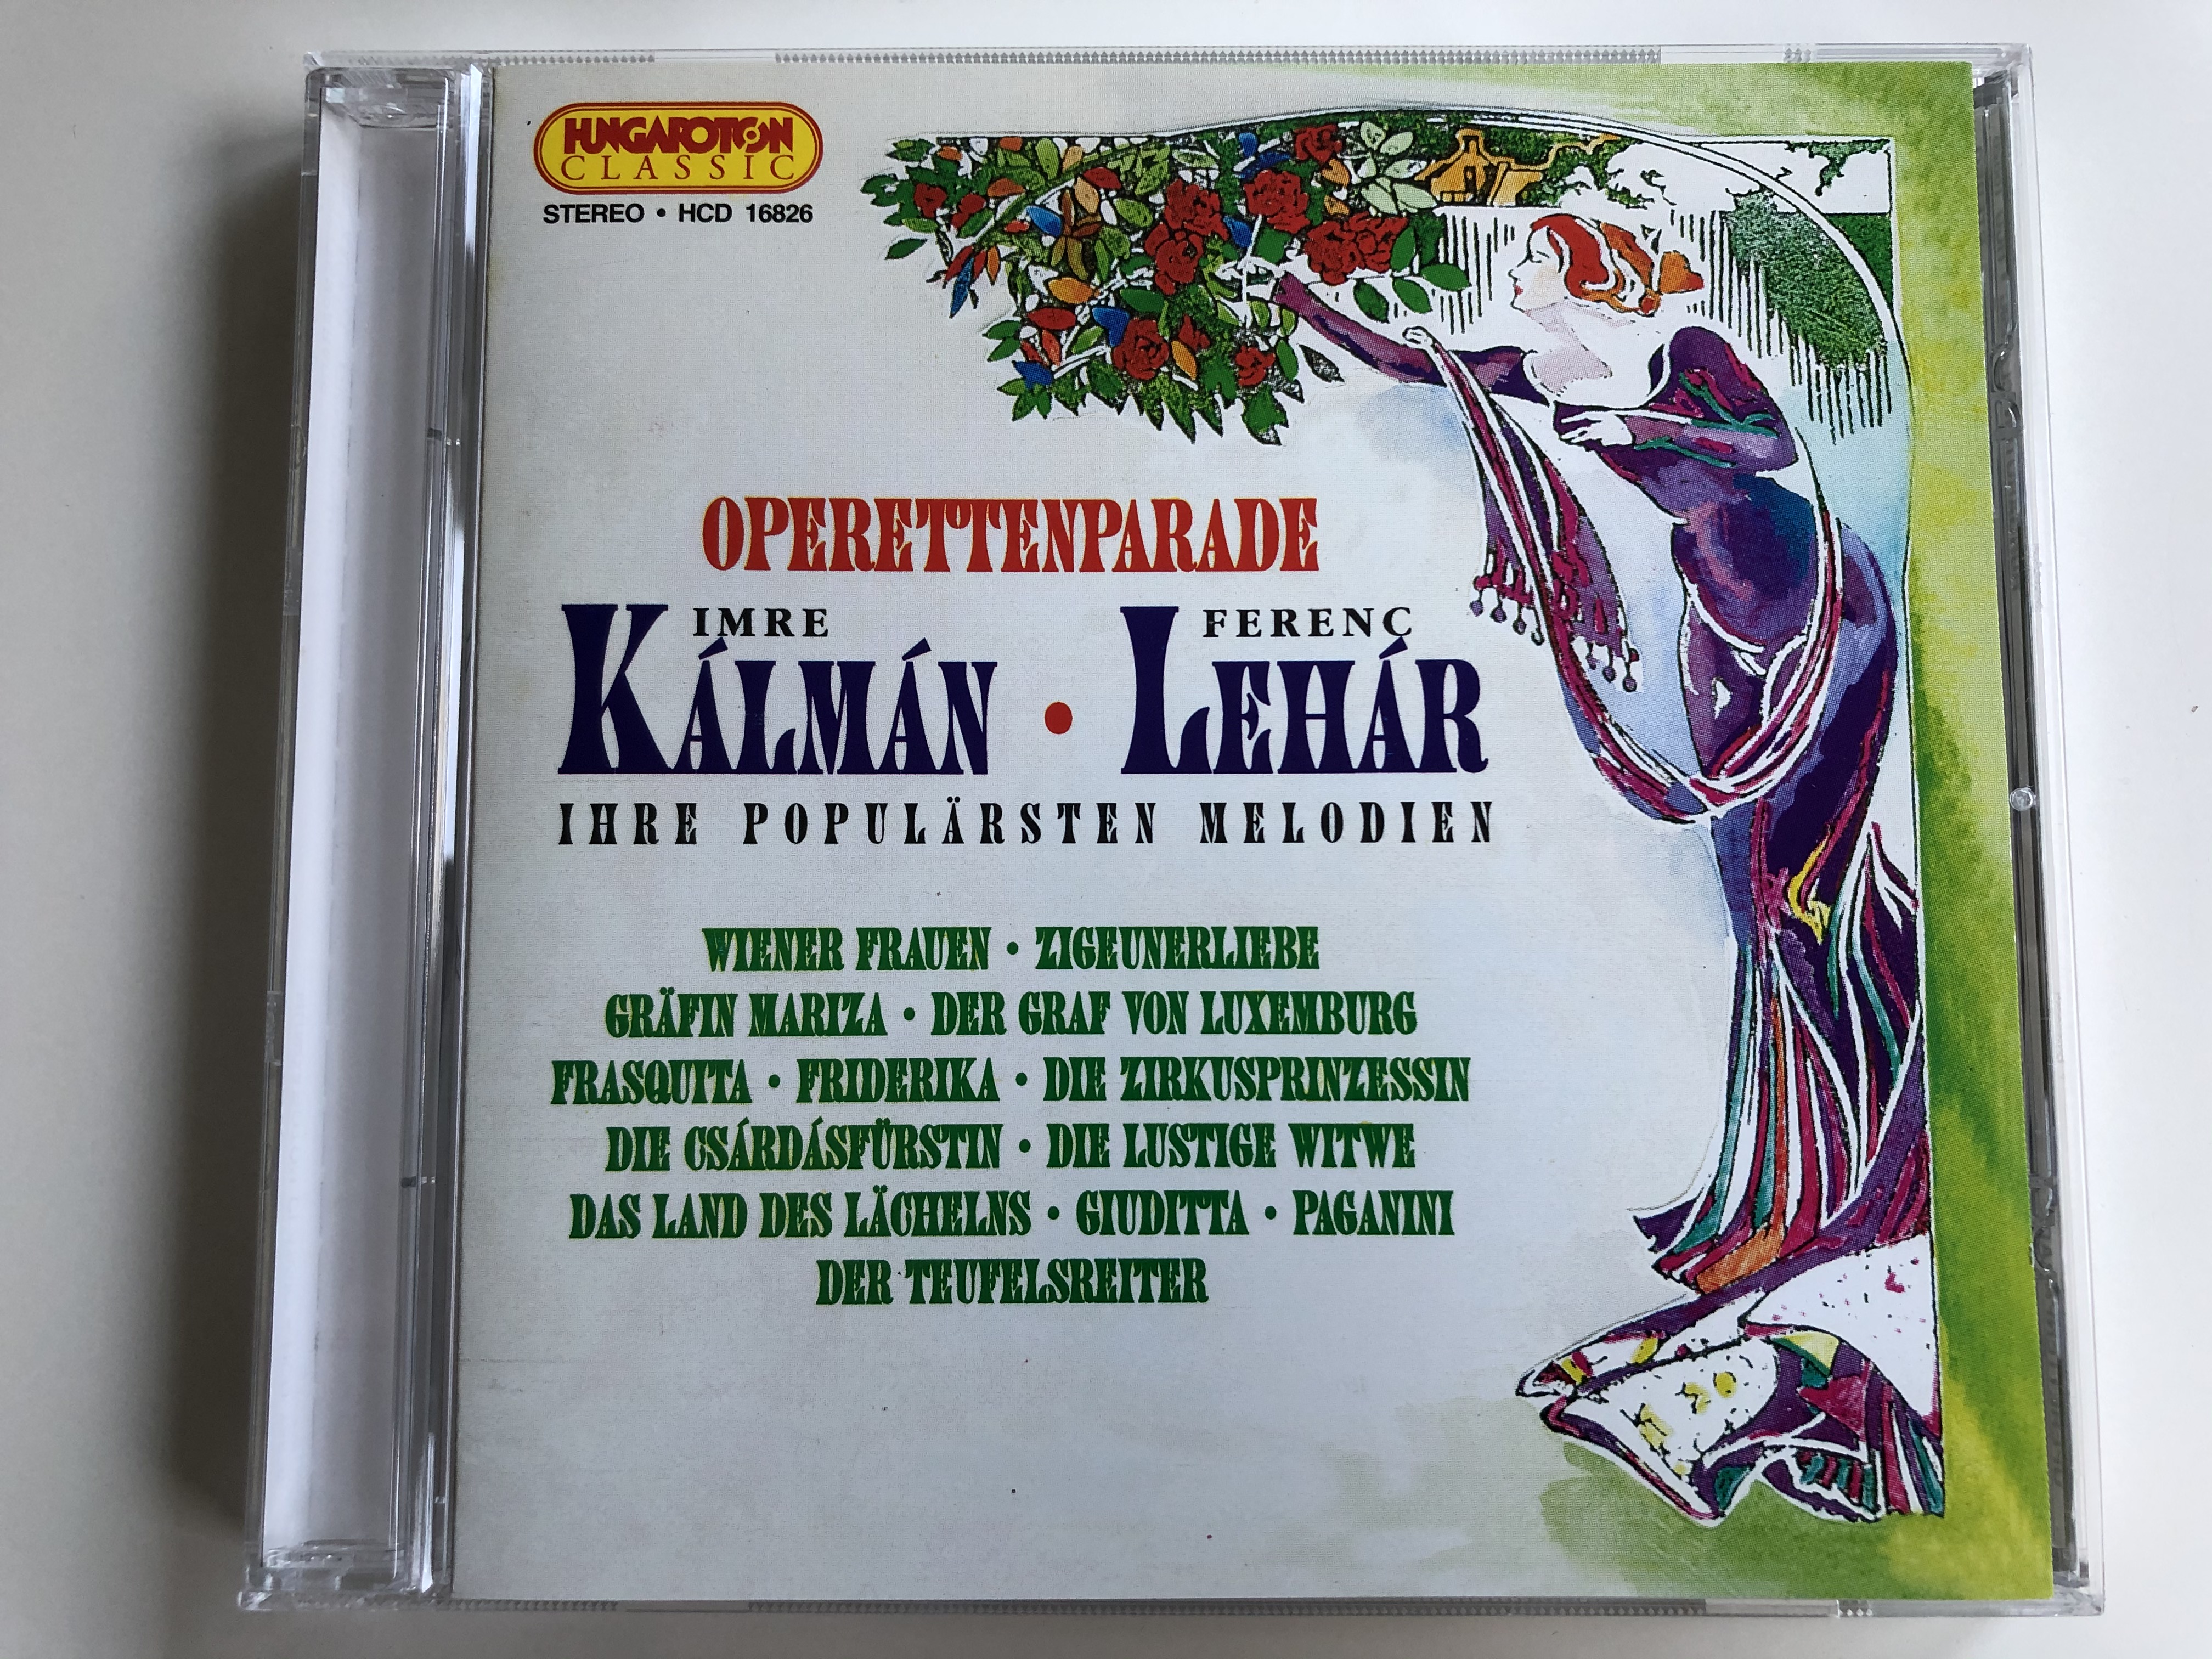 operettenparade-imre-k-lm-n-leh-r-ferenc-ihre-popularsten-melodien-wiener-frauen-die-zirkusprinzessin-das-land-des-lachelns-giuditta-paganini-hungaroton-classic-audio-cd-1994-stereo-hcd-1-.jpg